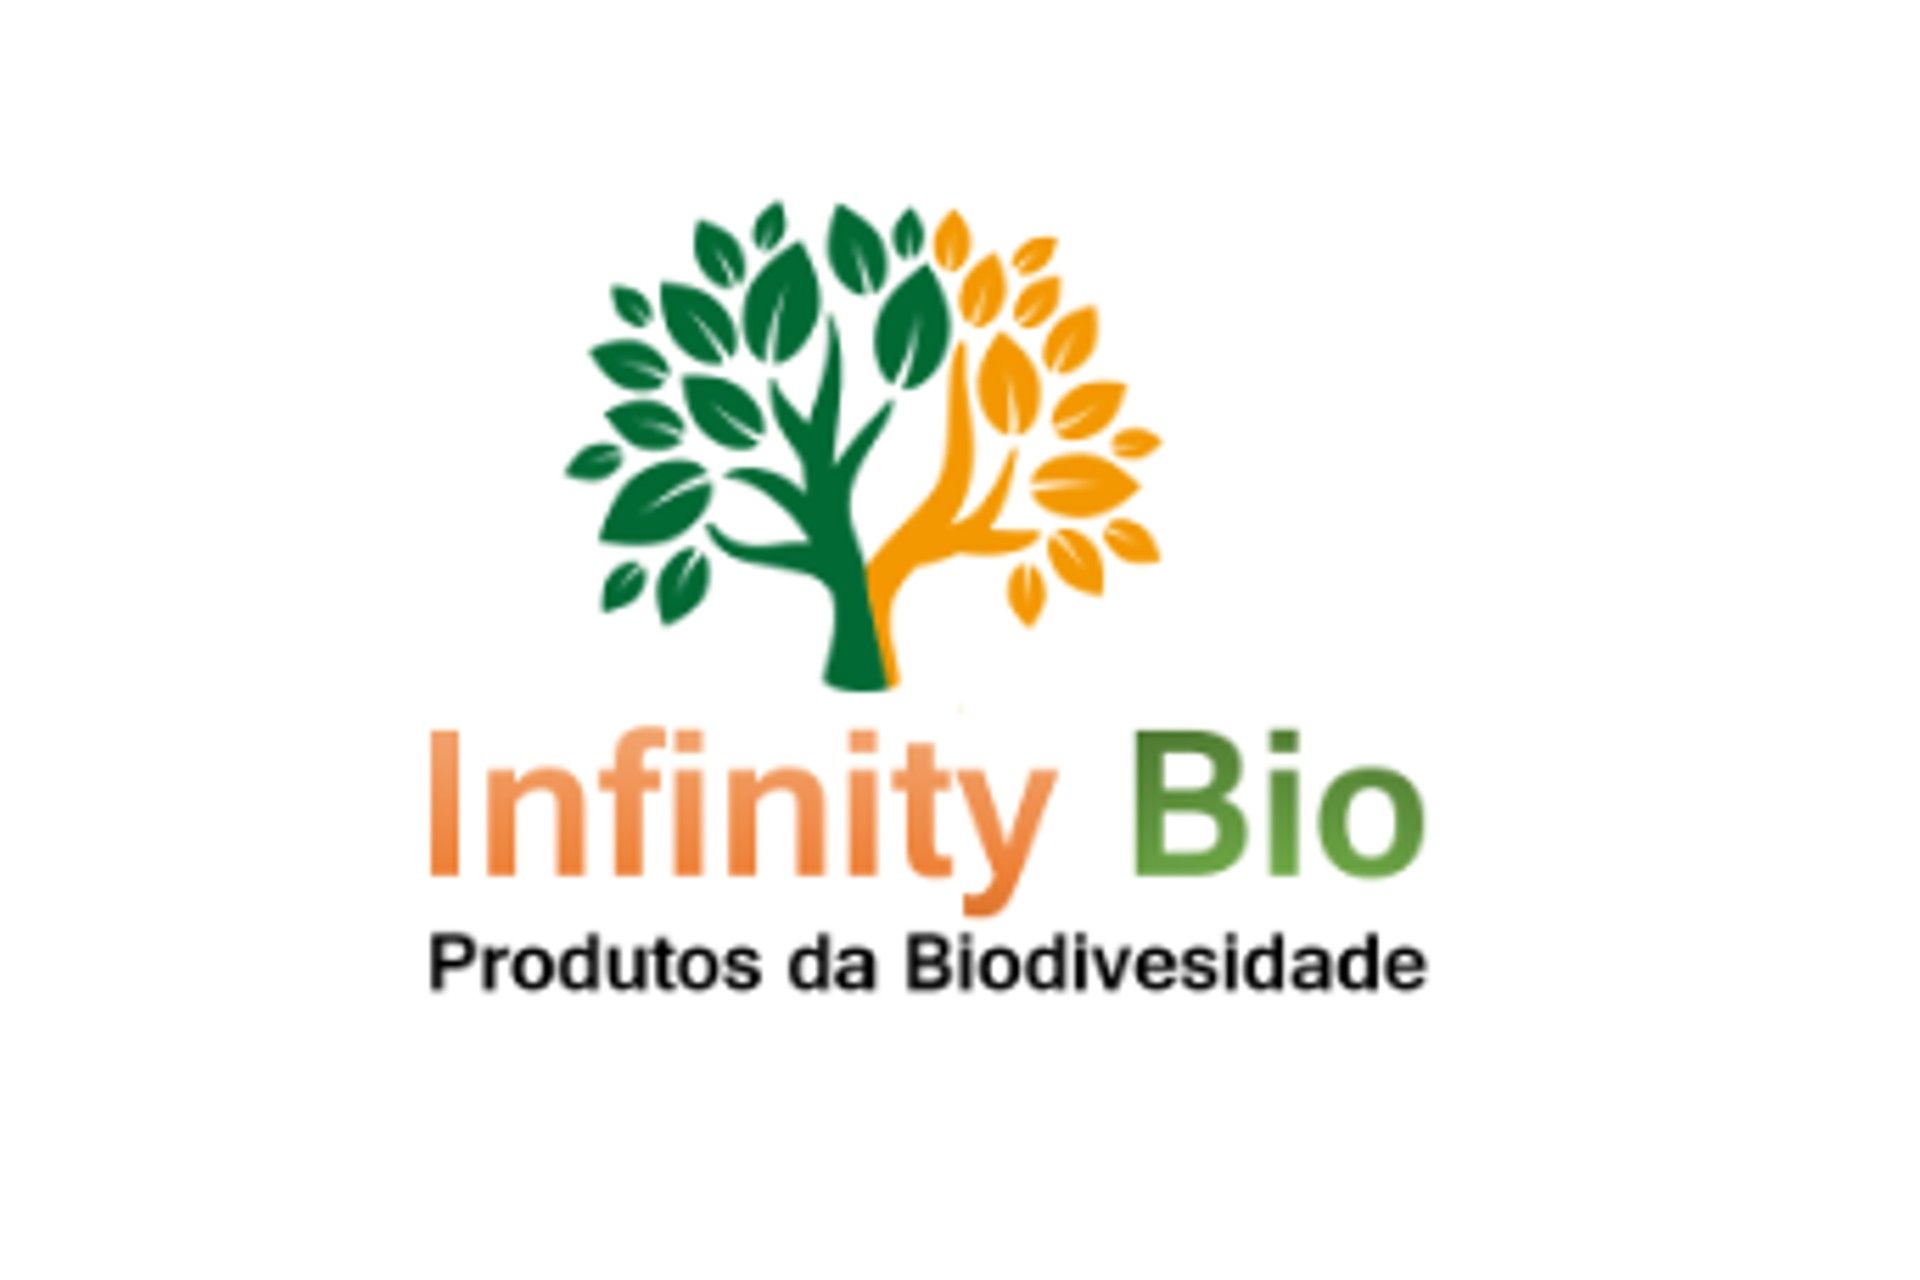 Infinity Bio logo crowdfunding